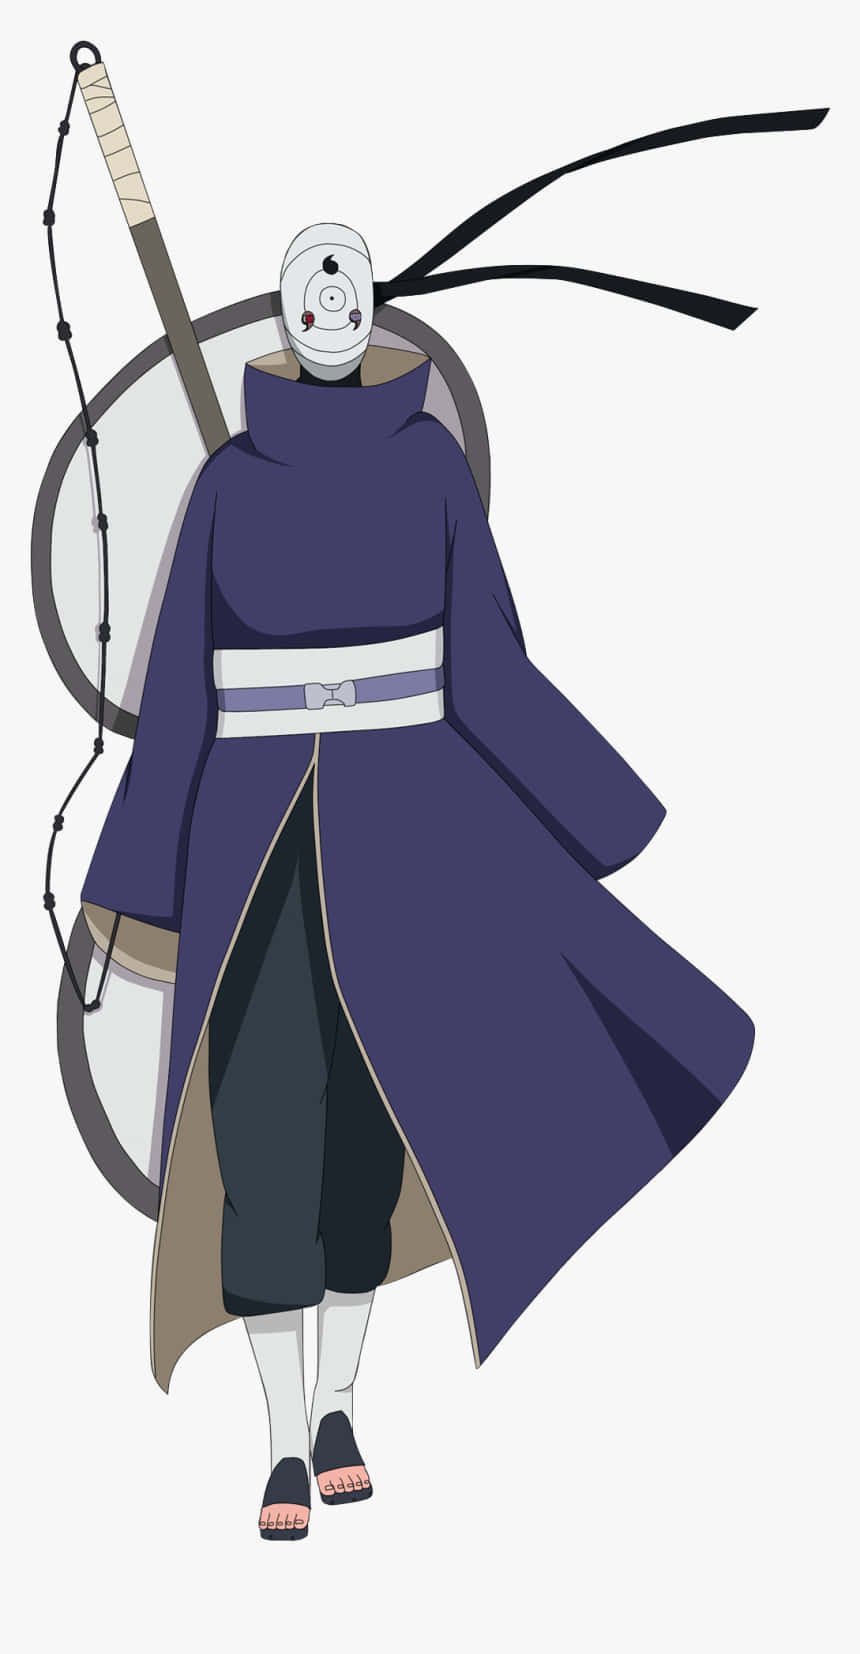 Madara Uchiha, leader of the Akatsuki, as seen in the Naruto anime series. Wallpaper